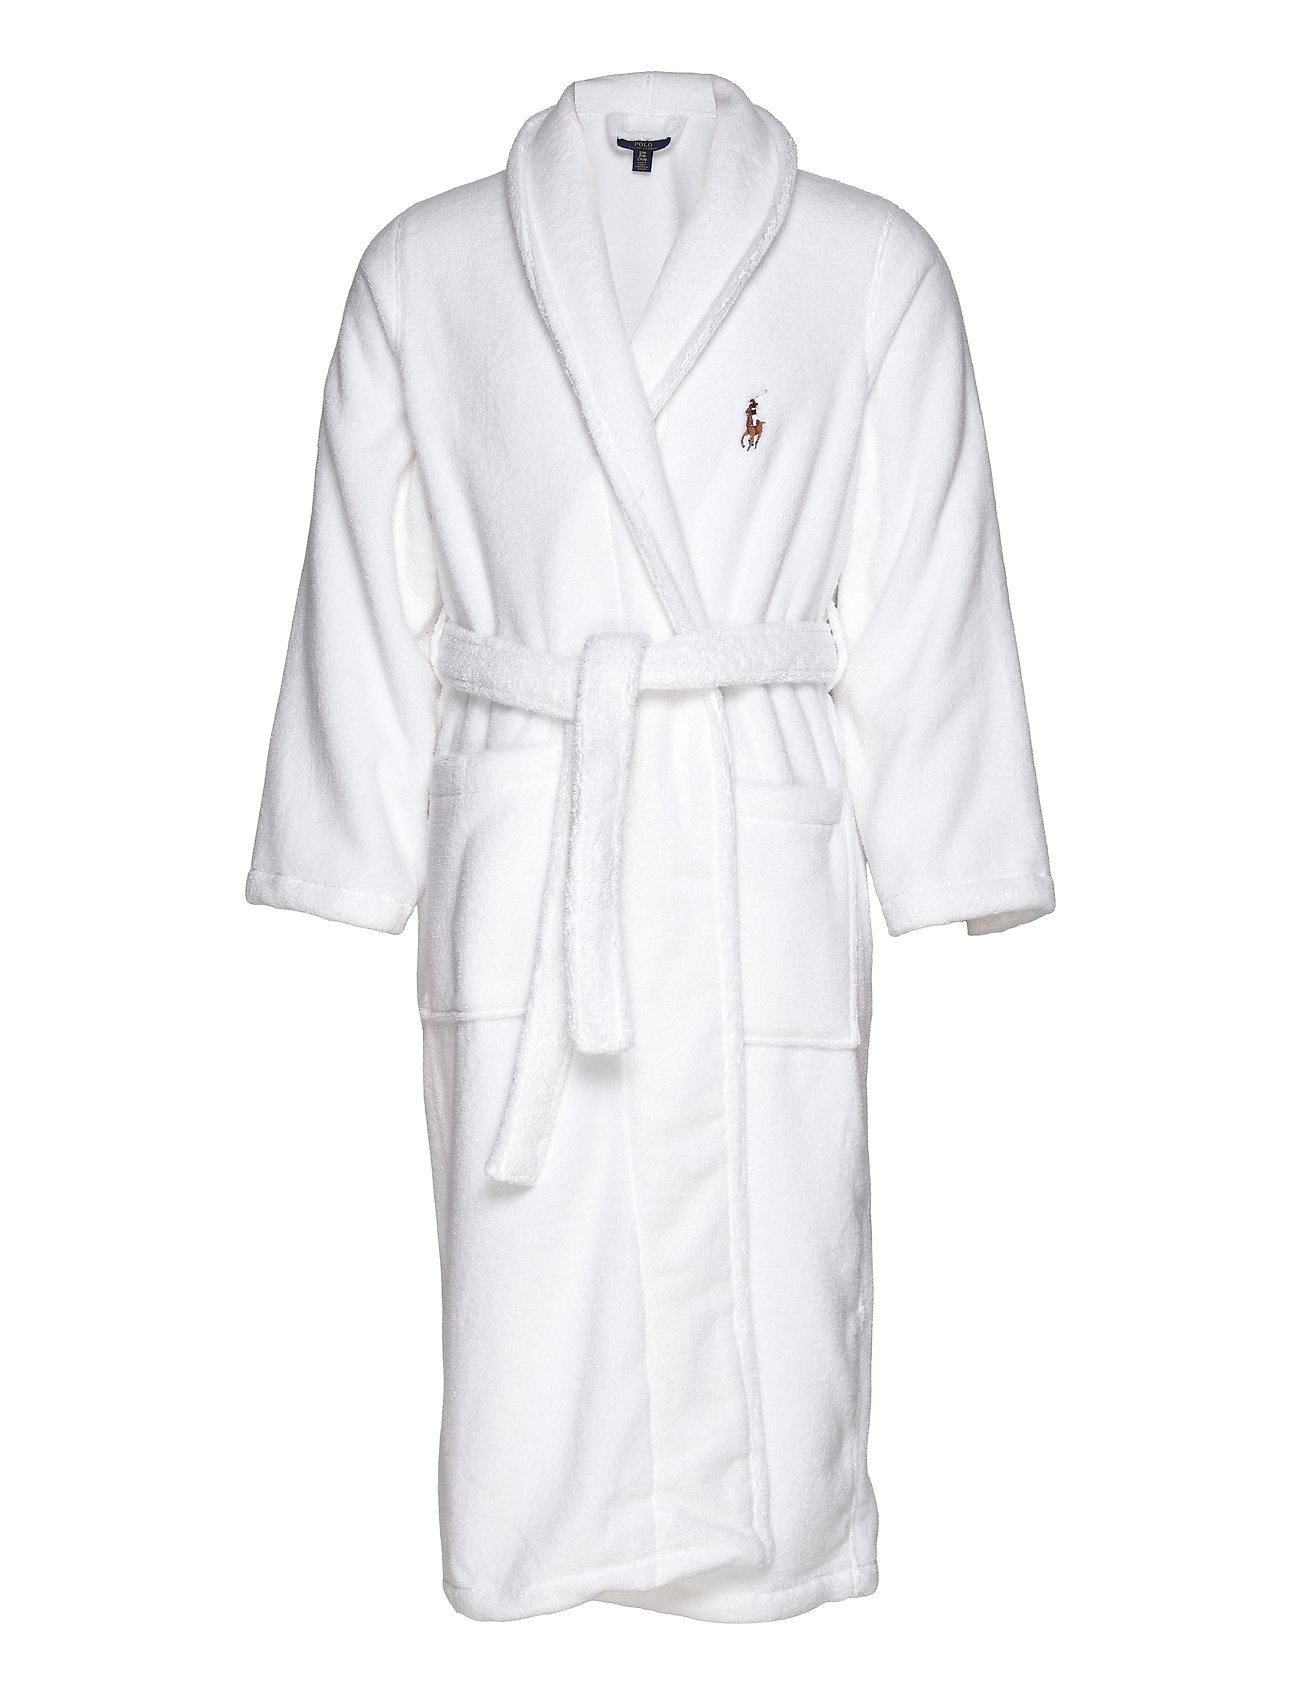 CaribbeanpoultryShops - White Polo Ralph Lauren men polo - shirts robes  accessories box